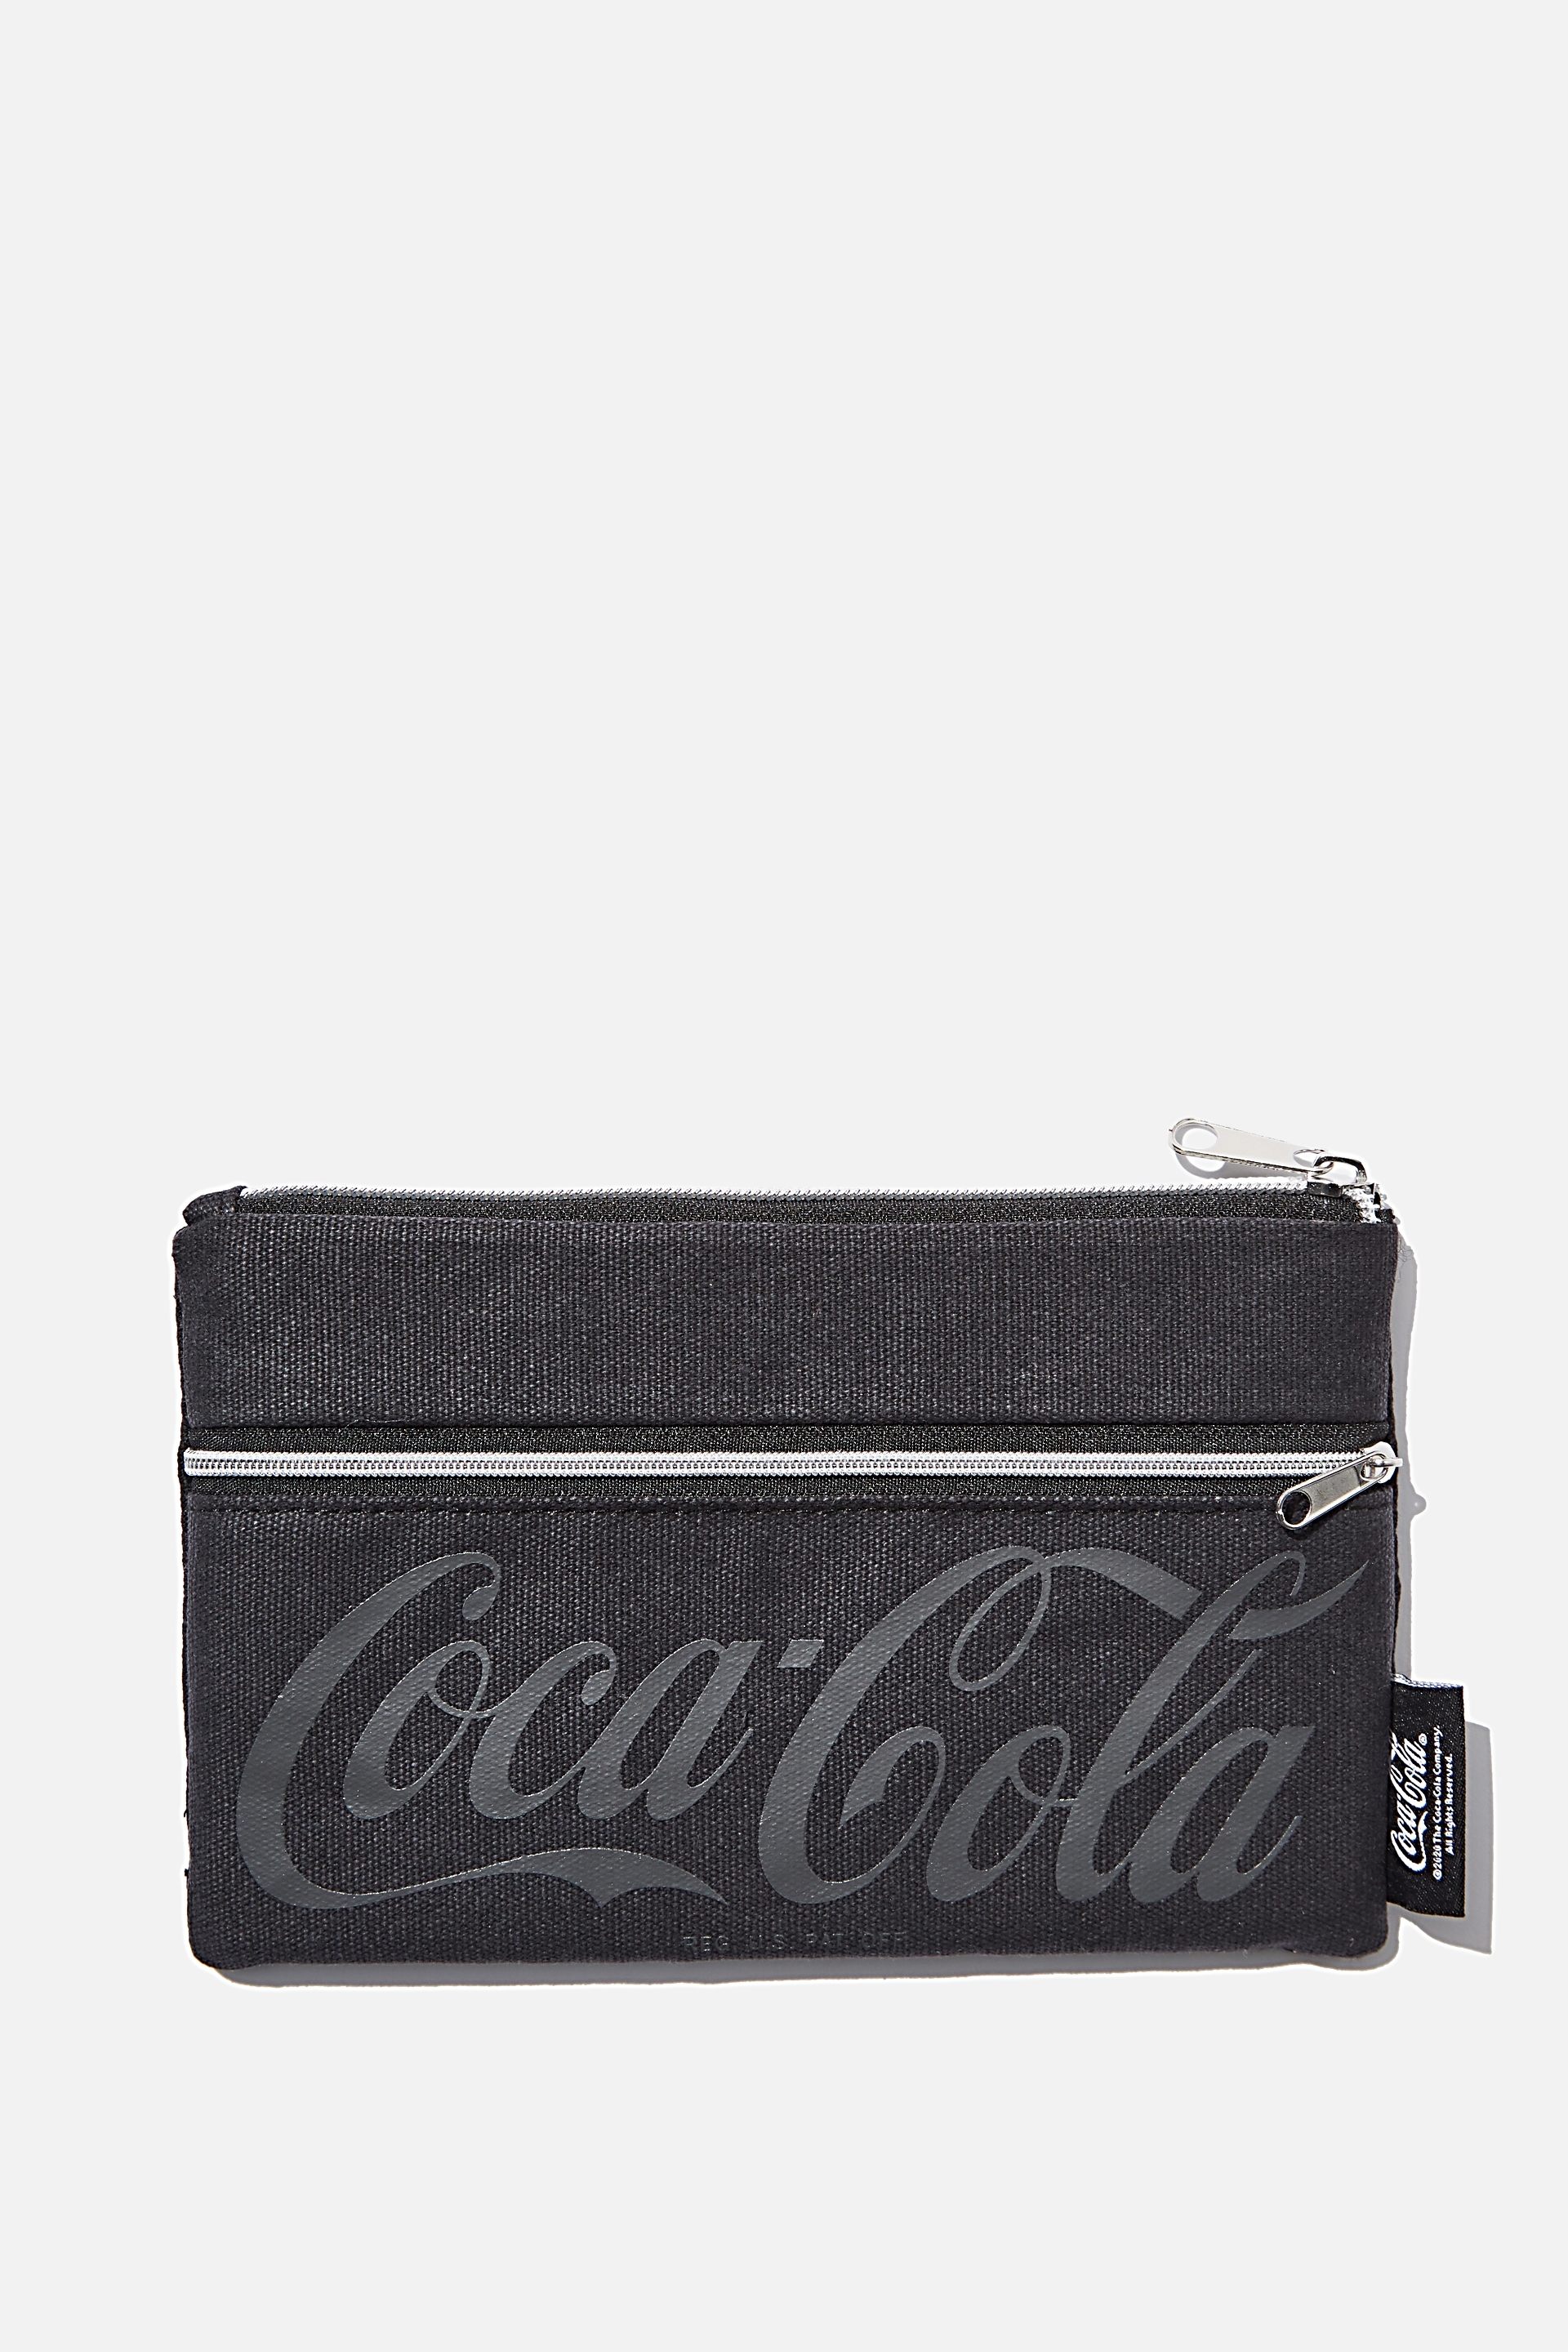 Typo - Coca Cola Archer Pencil Case - Lcn cok coca cola